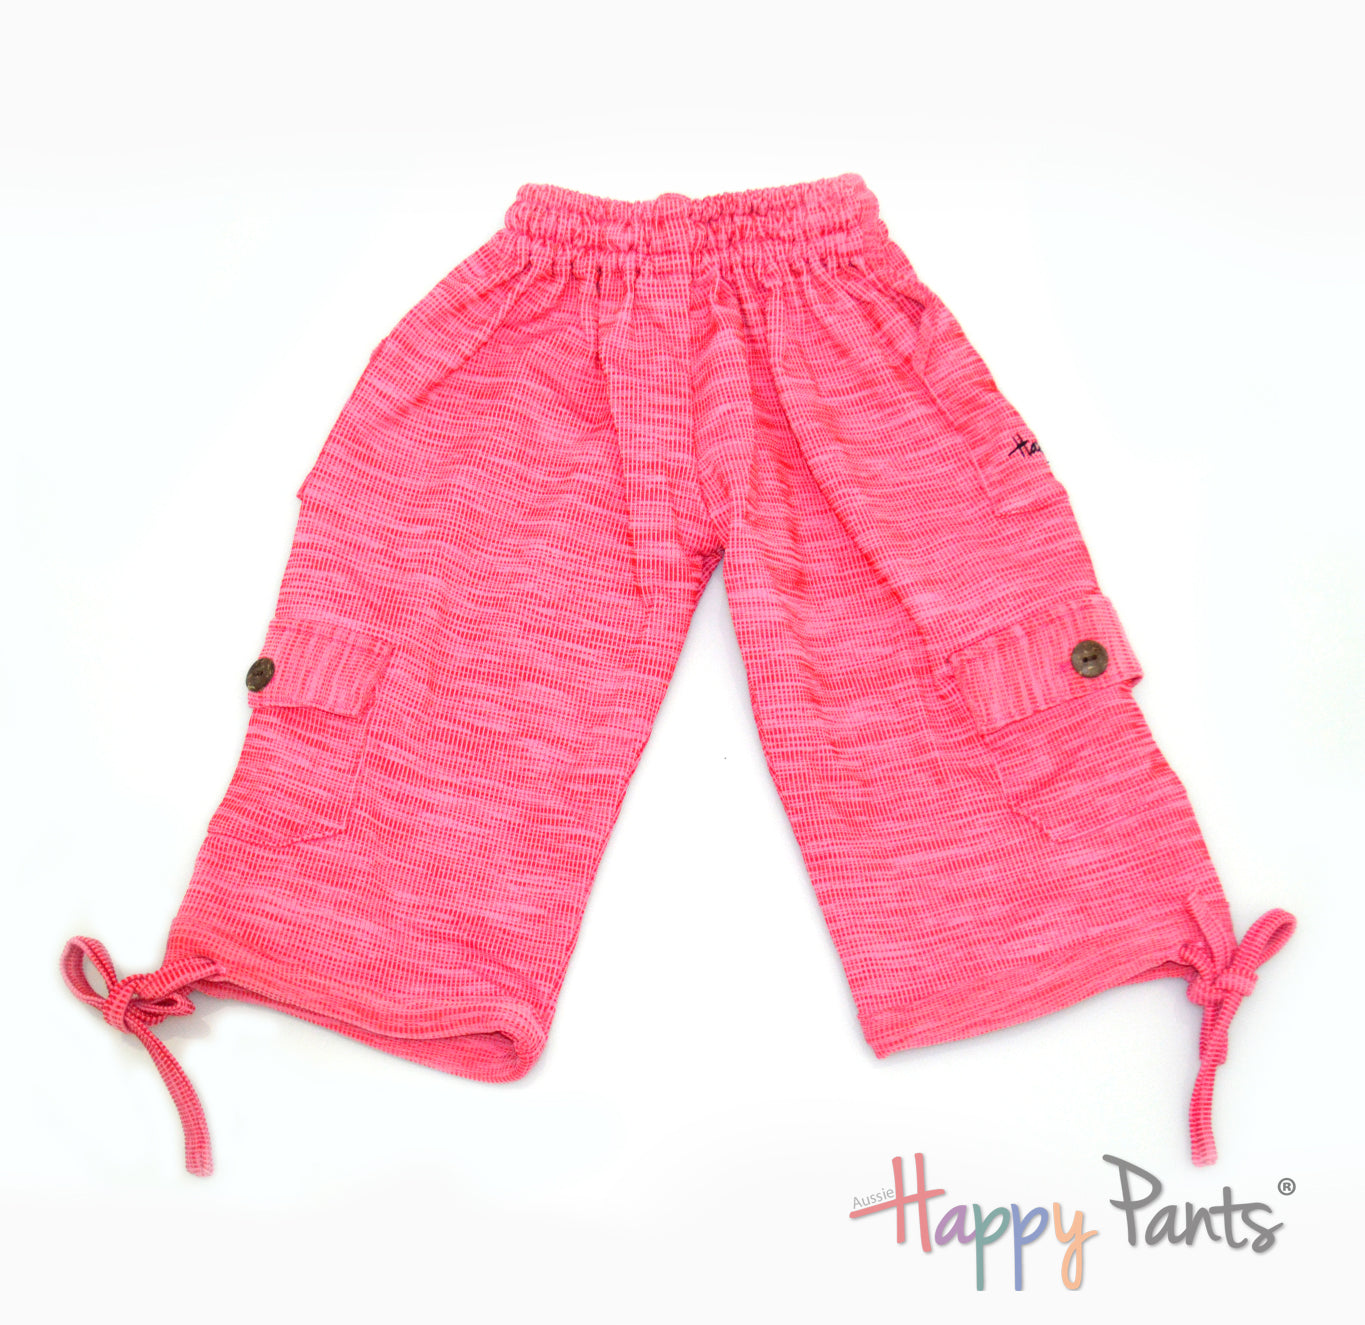 Watermelon Delight Pink Kids Boardshorts 3/4 Shorts